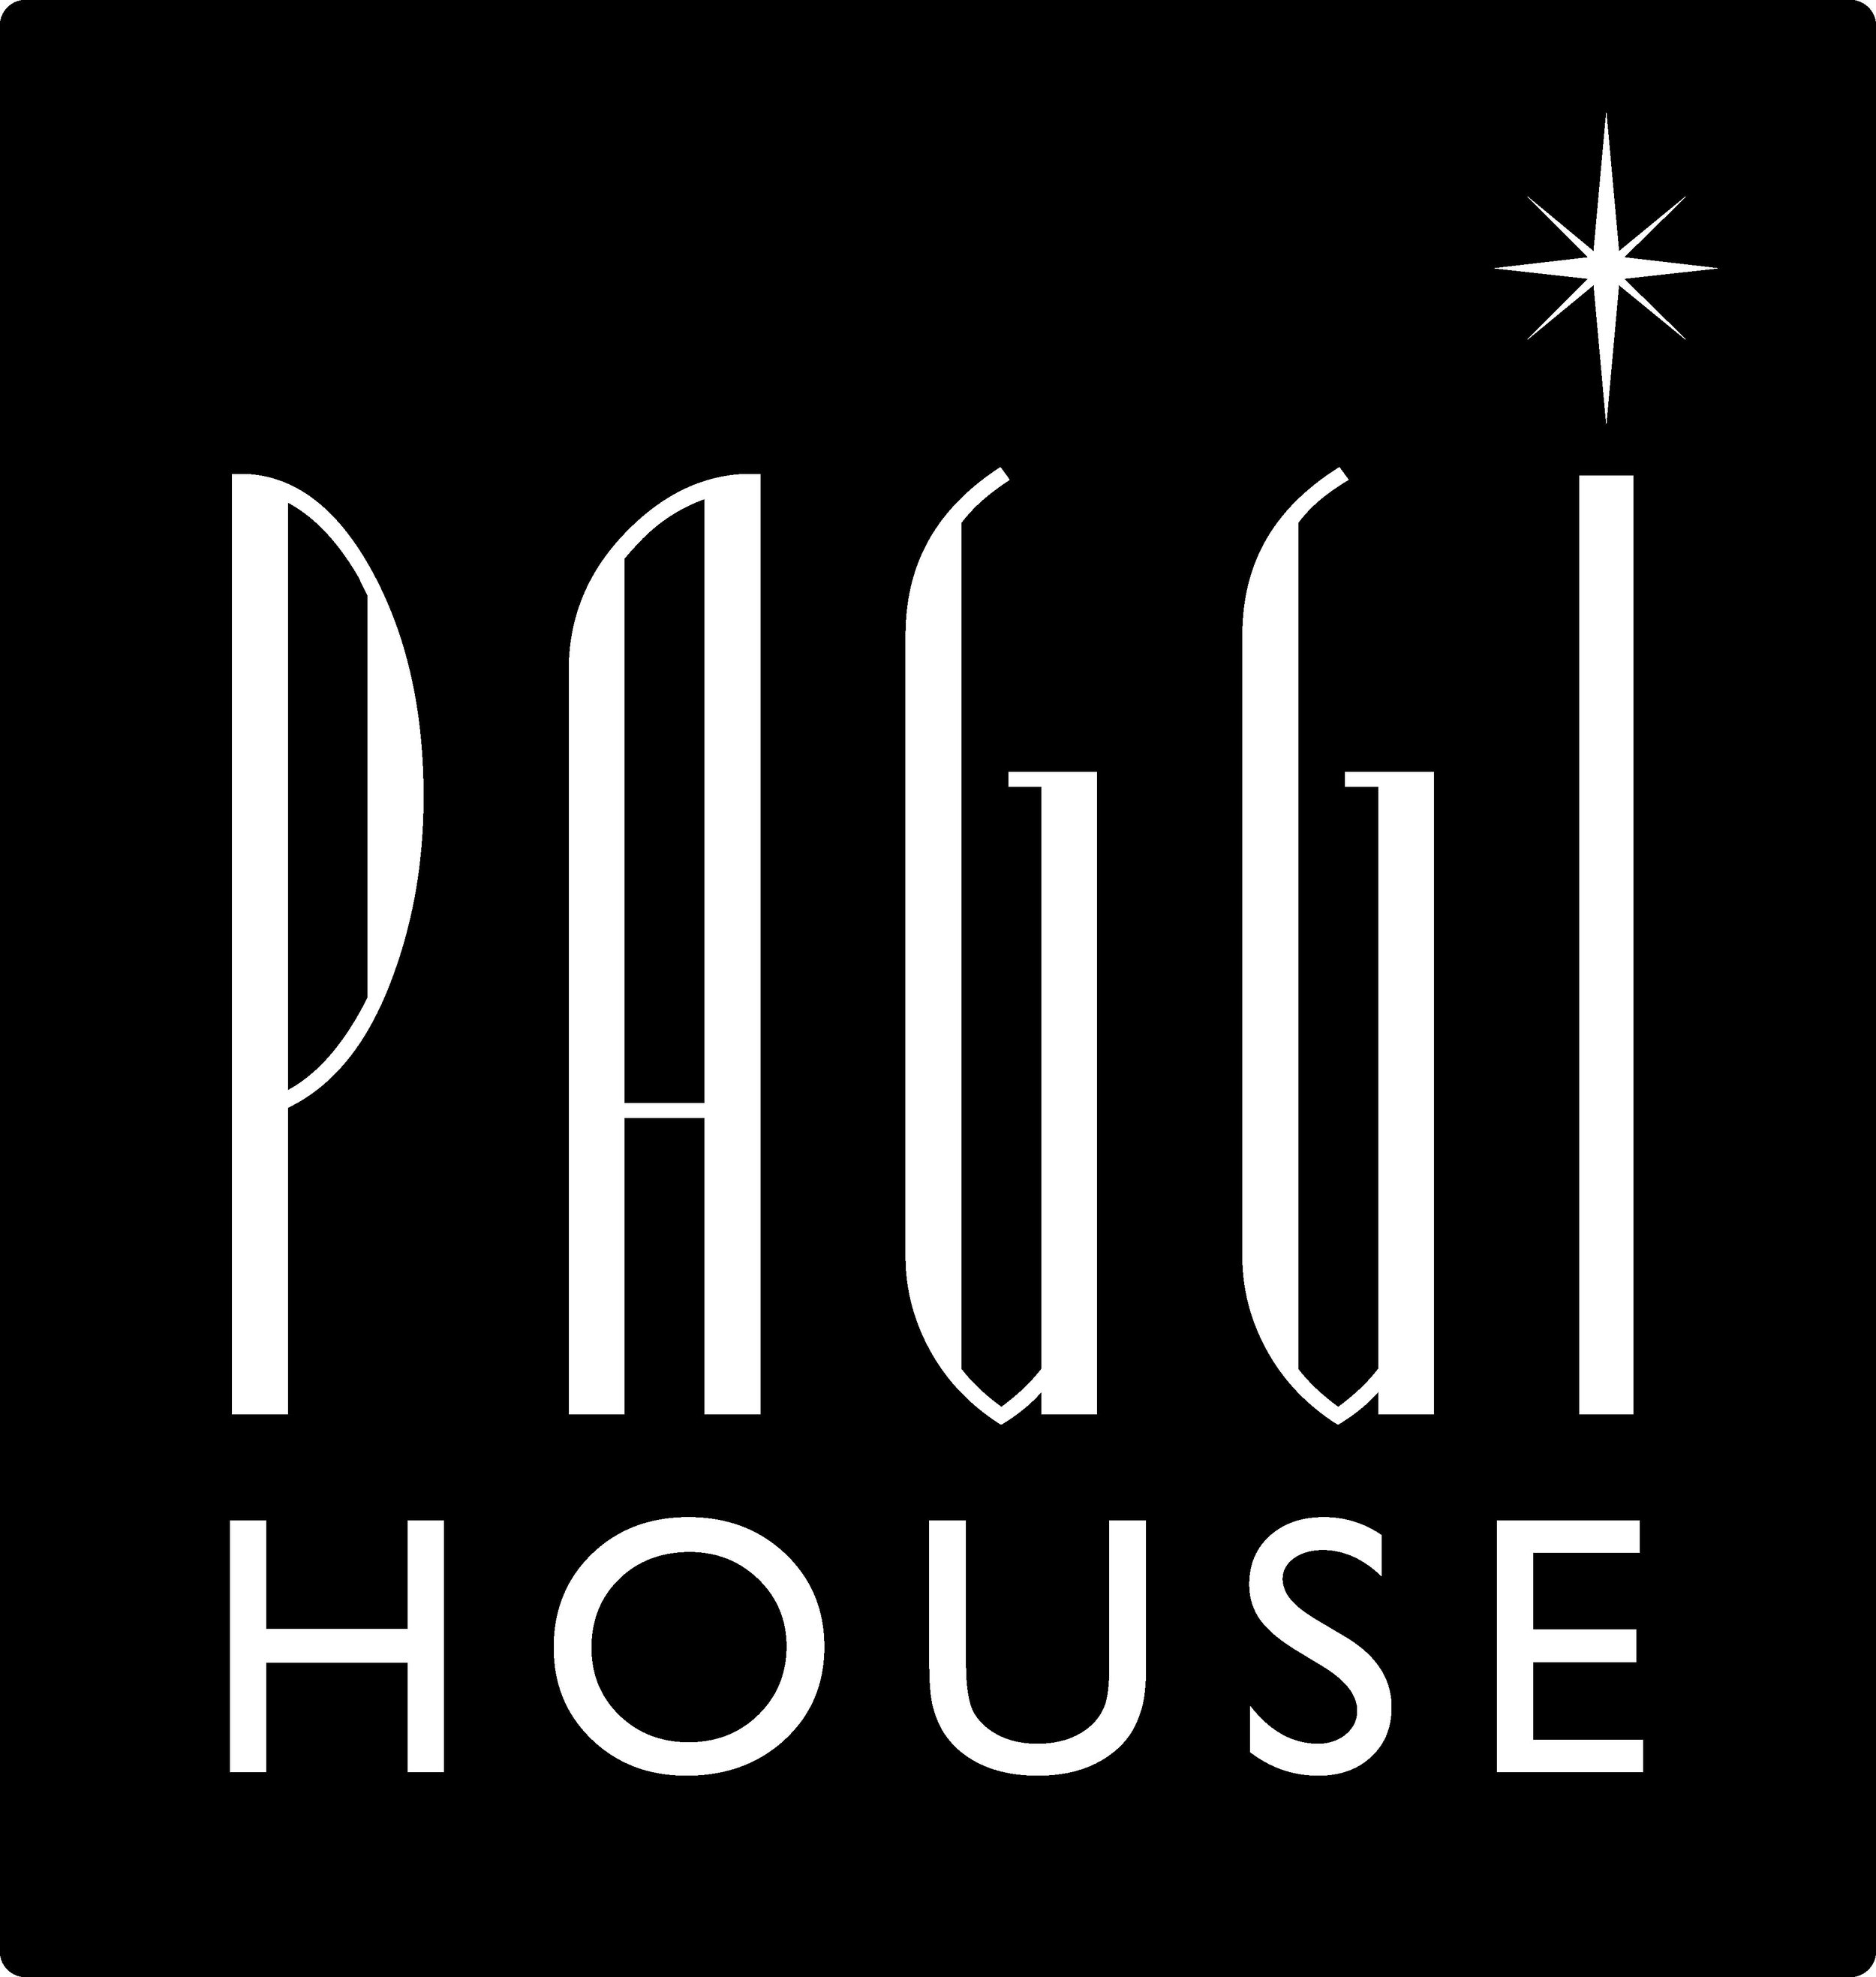 Paggi House (Sold)